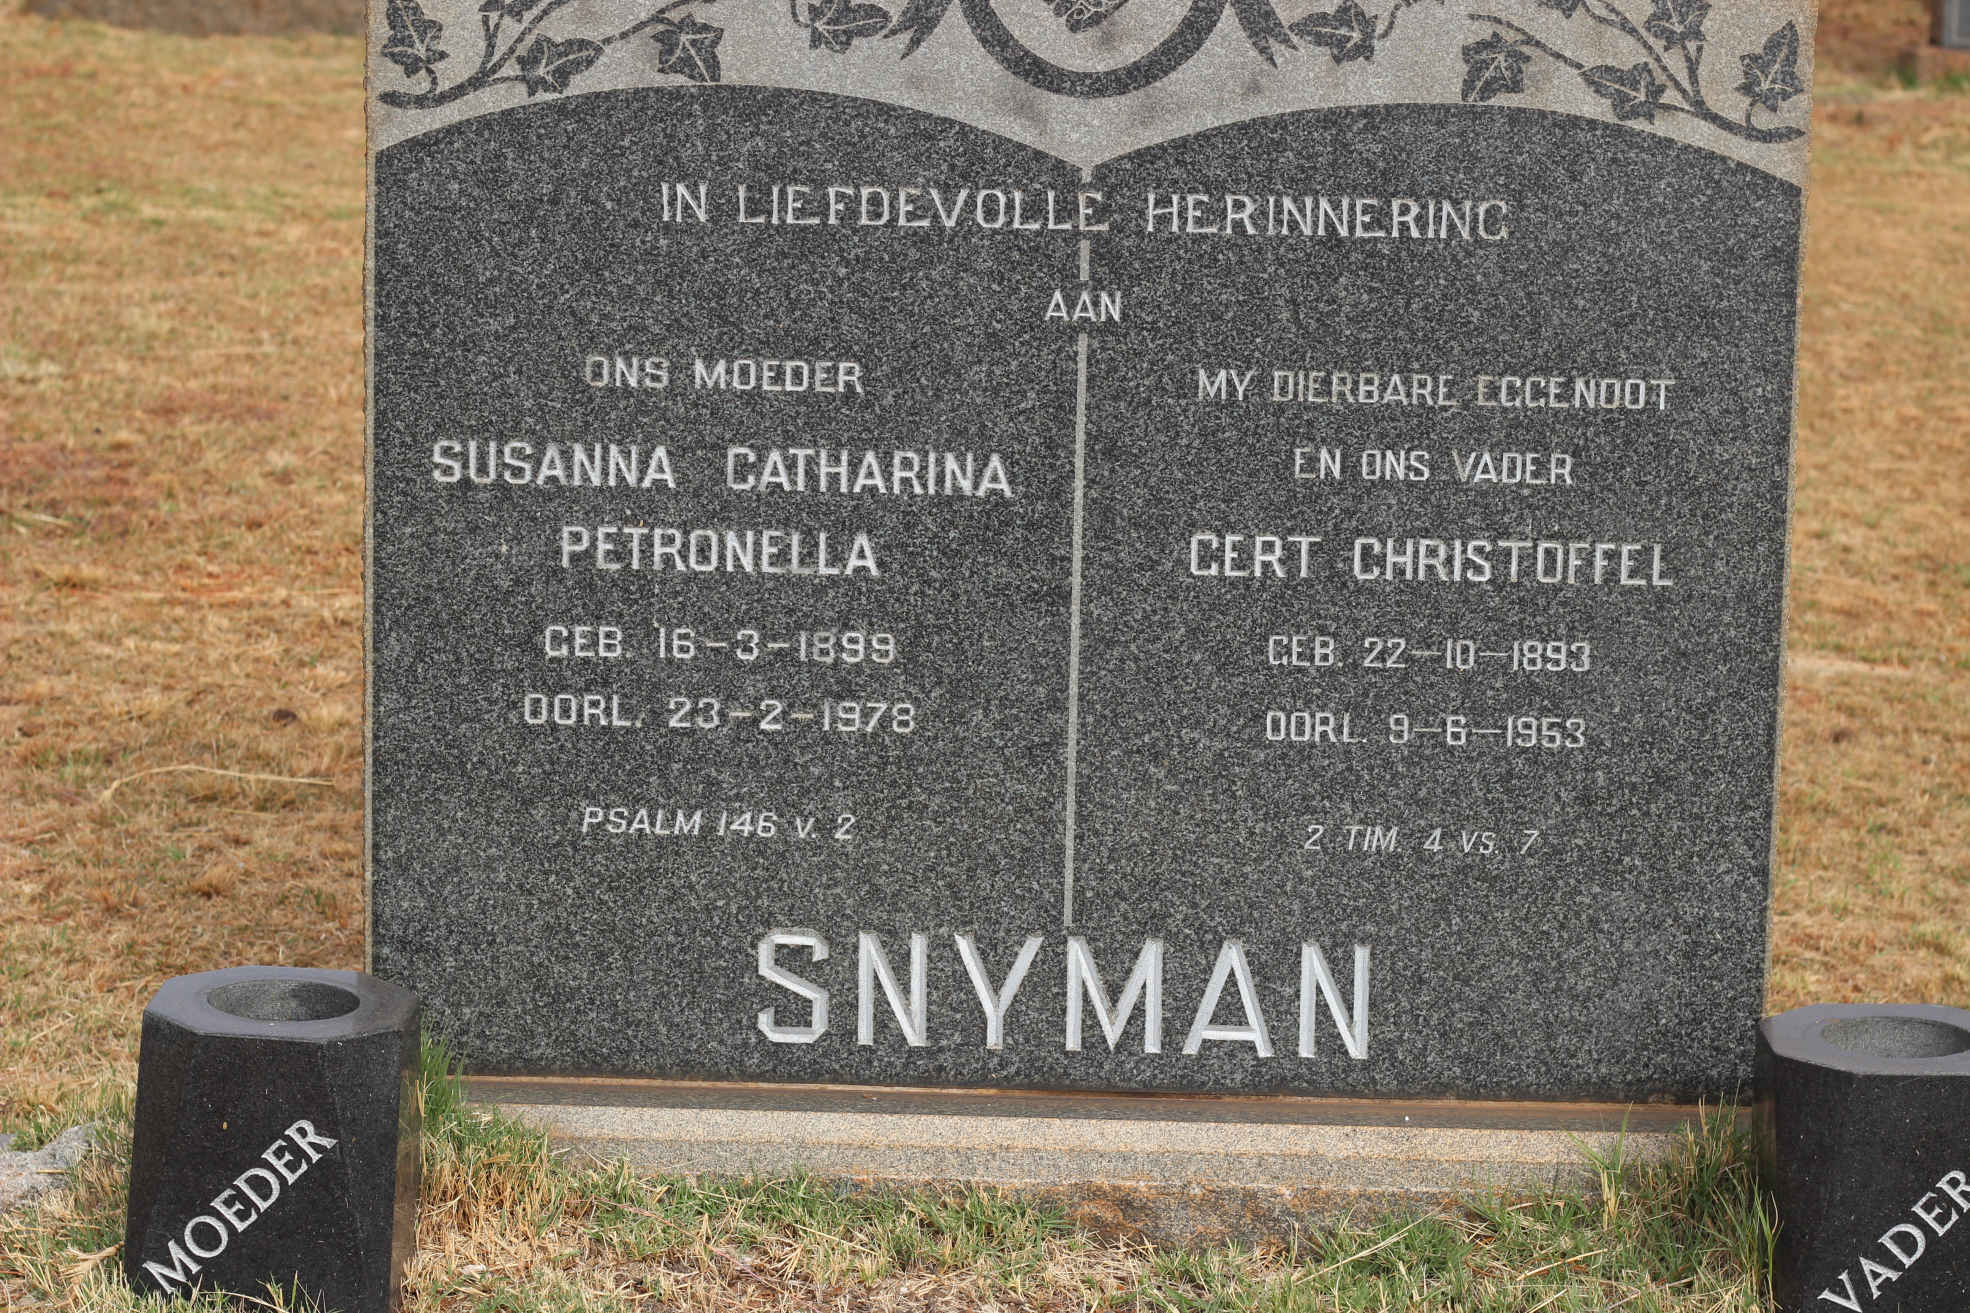 SNYMAN Gert Christoffel 1893-1953 & Susanna Catharina Petronella 1899-1978